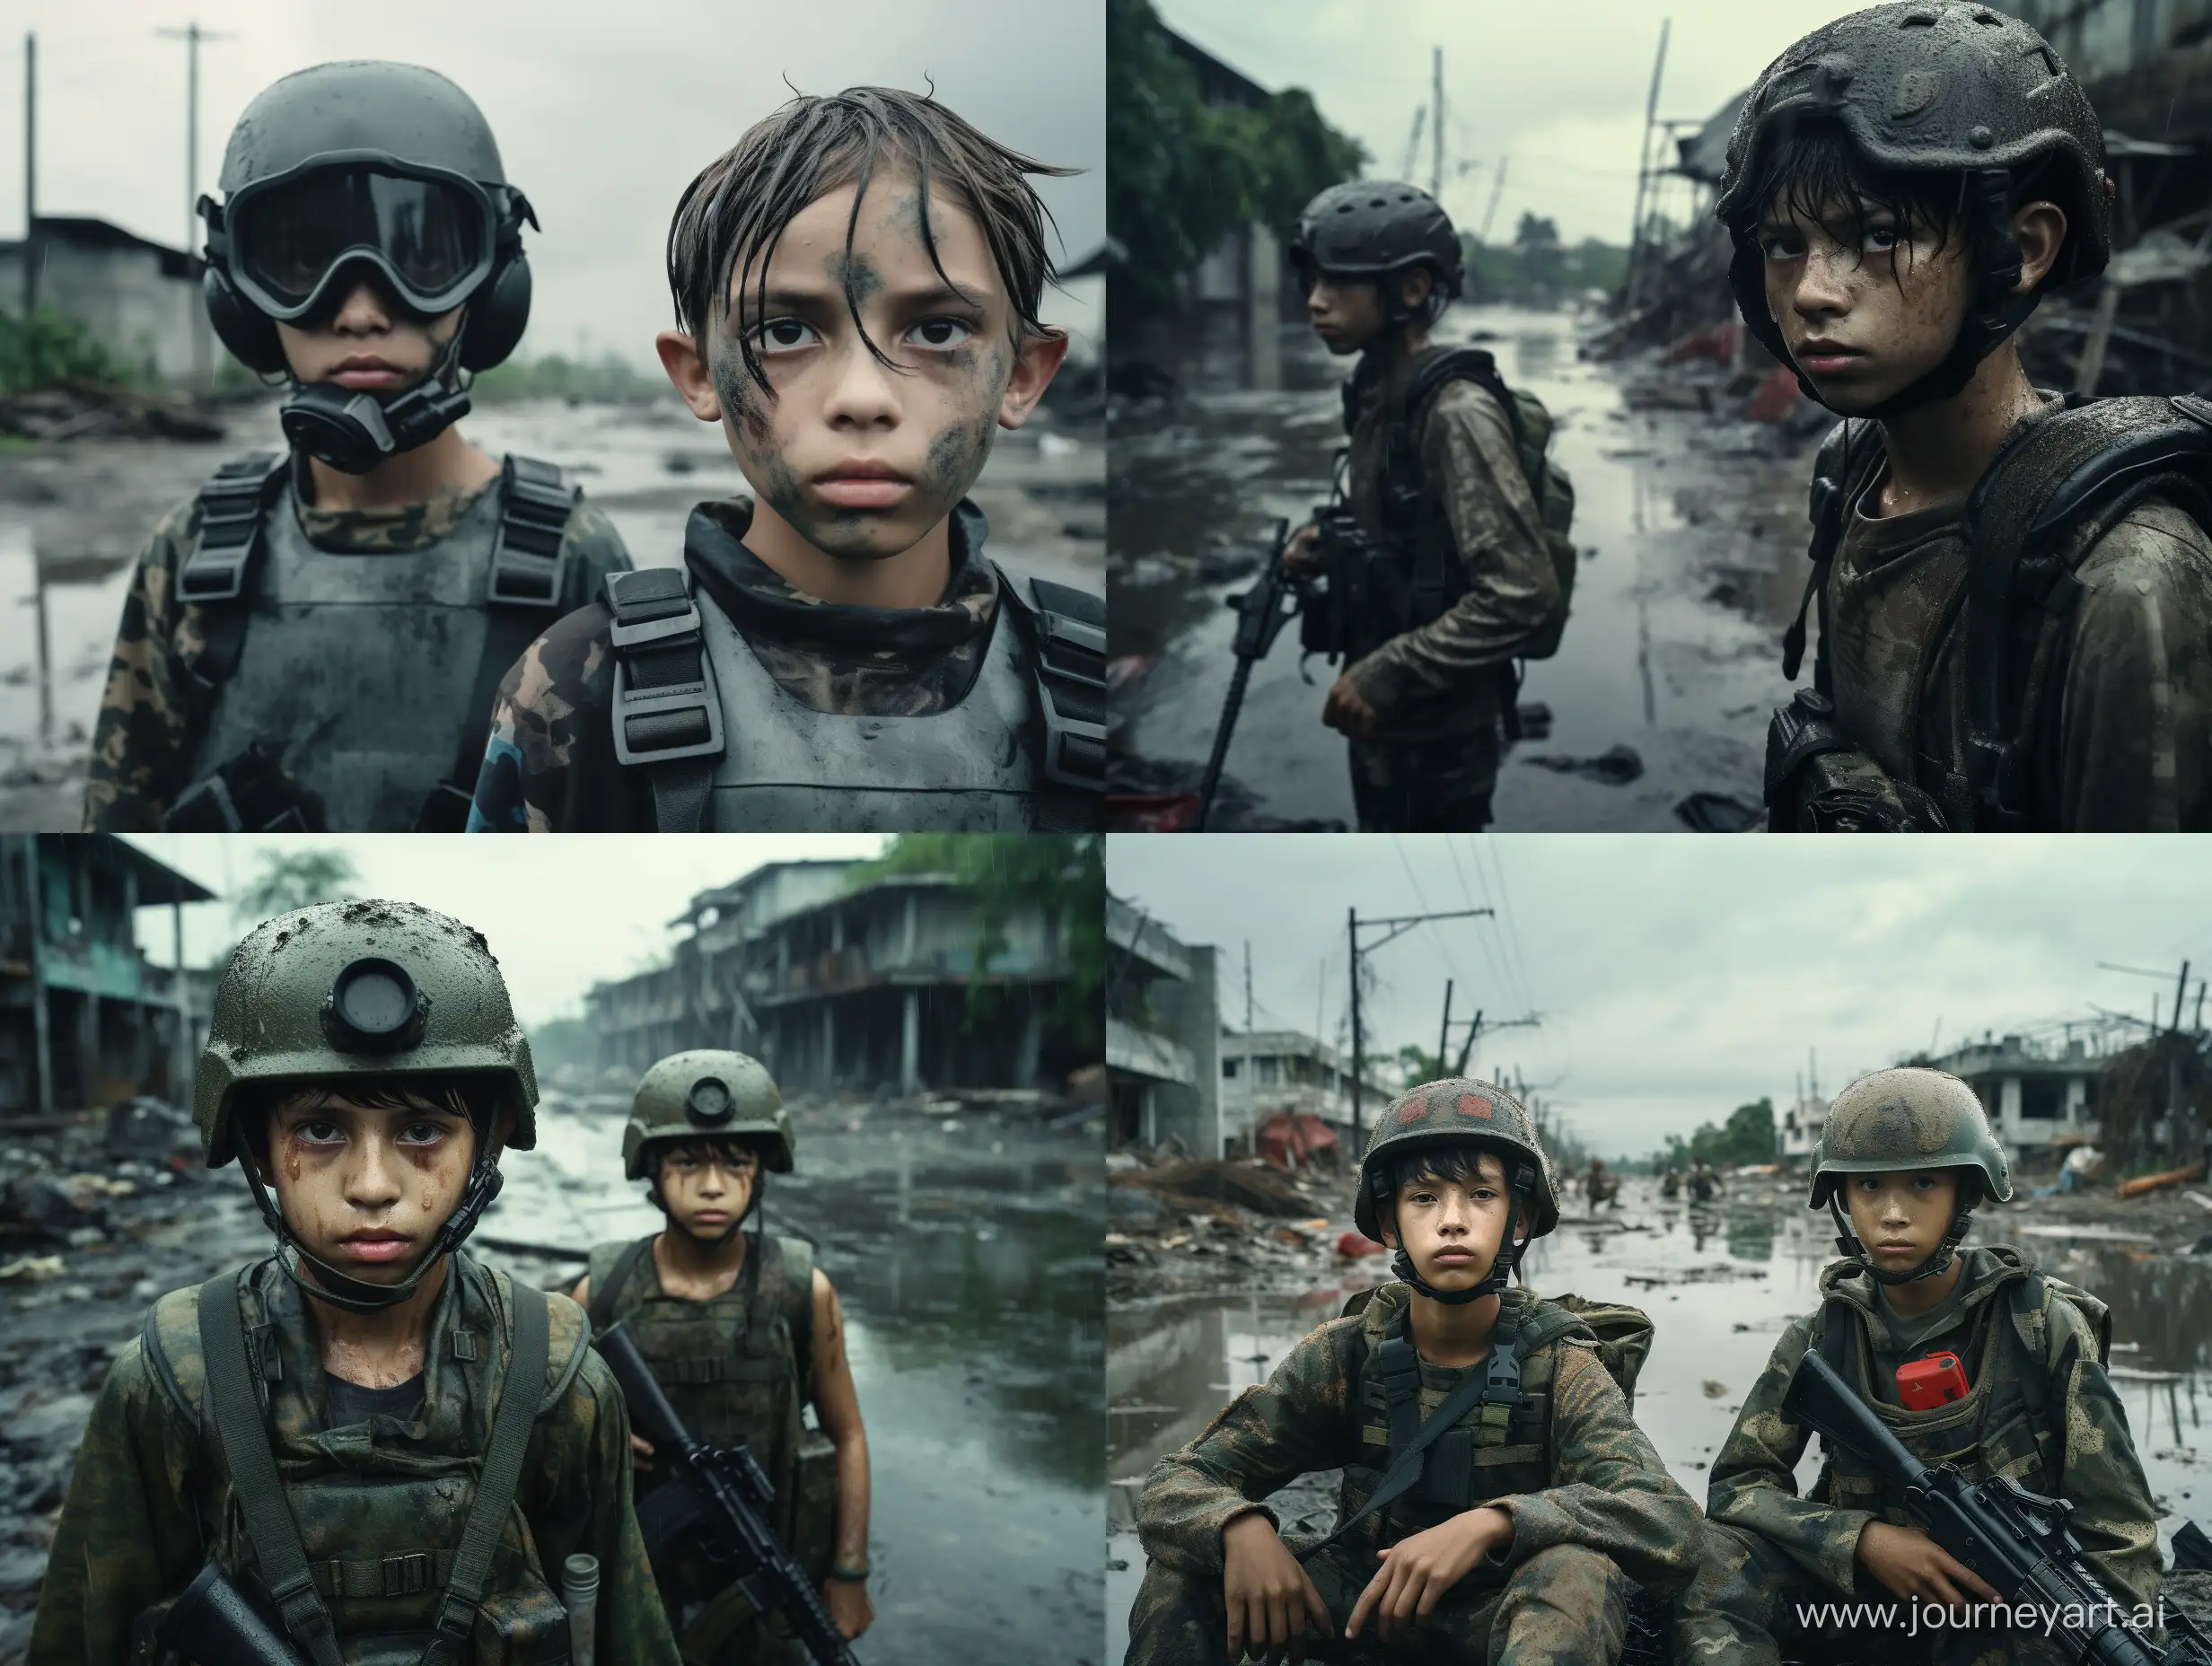 PostApocalyptic-Teenage-Soldiers-in-Eerie-Suburban-Philippines